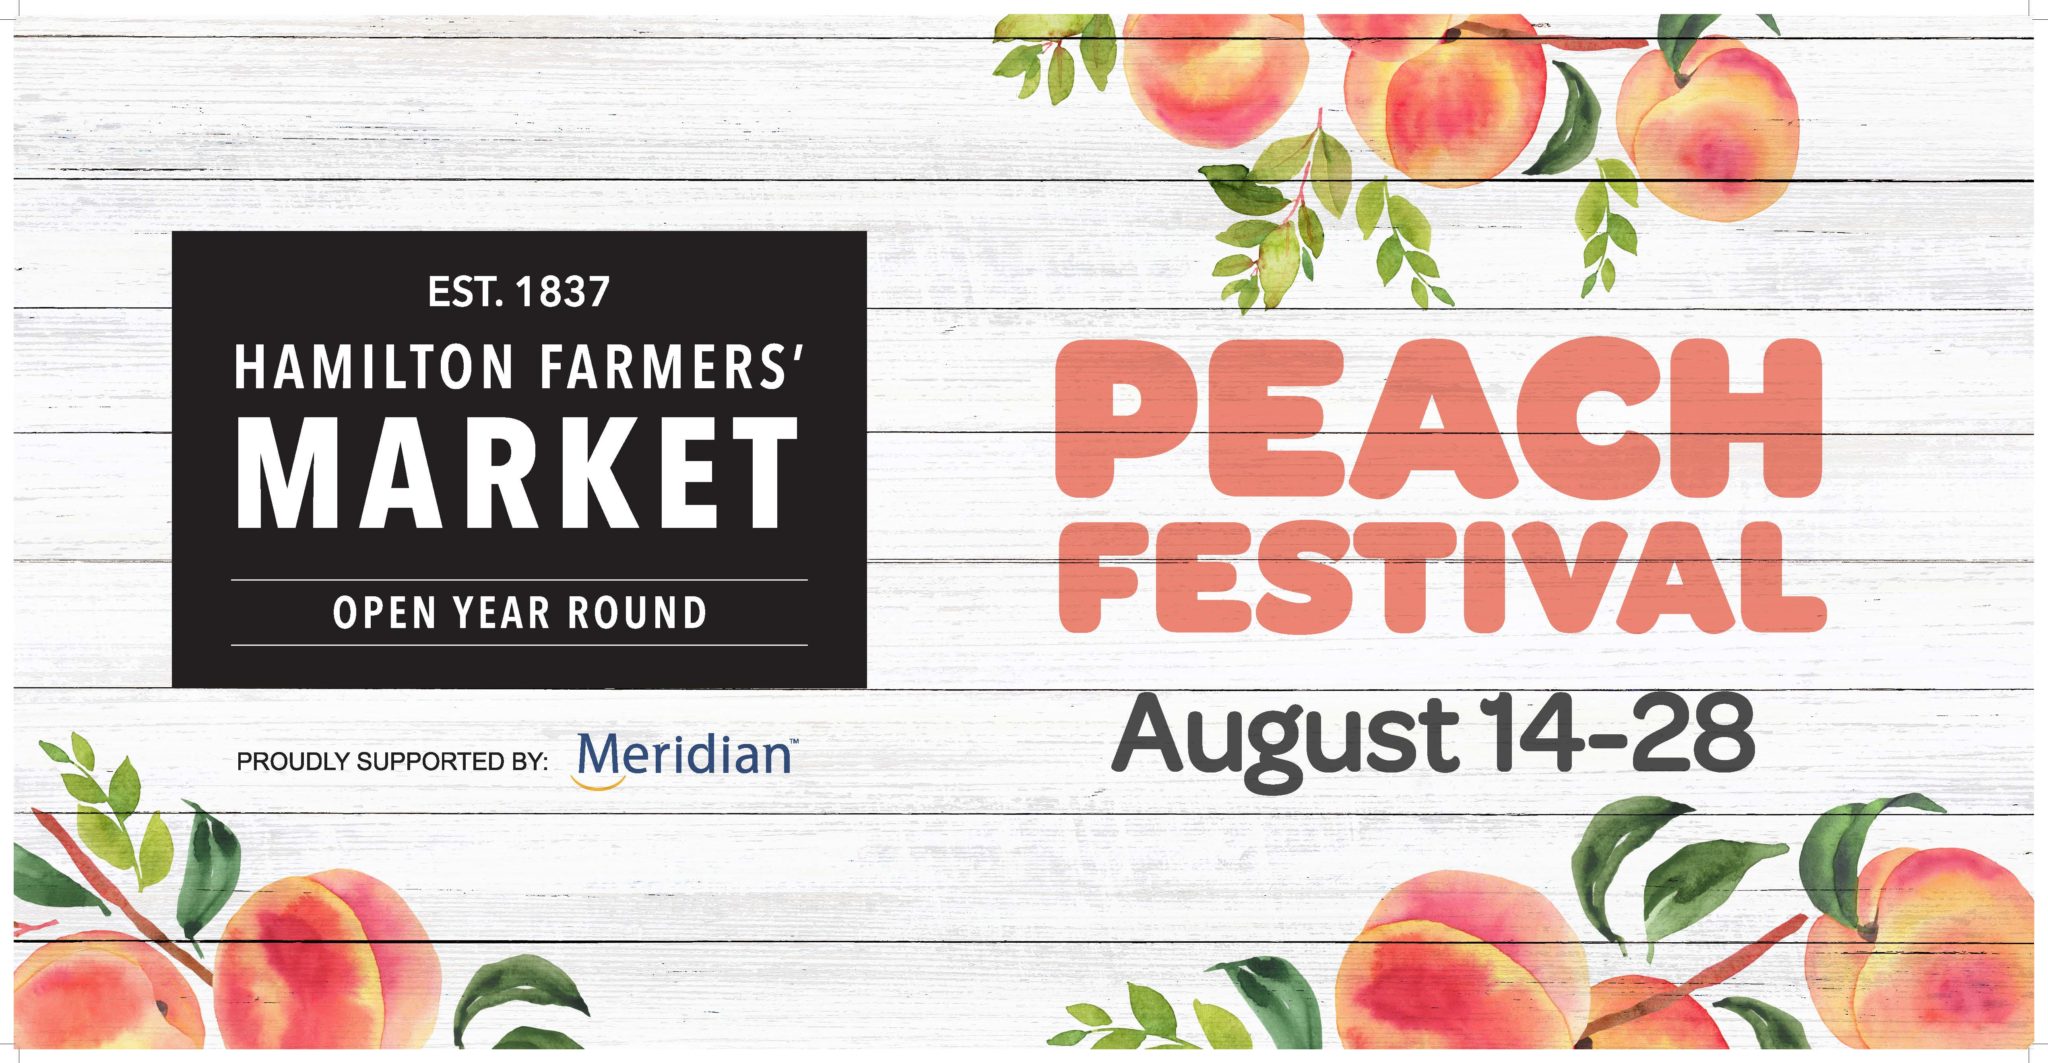 Hamilton Farmers' Market Peach Festival! Hamilton Farmers' Market